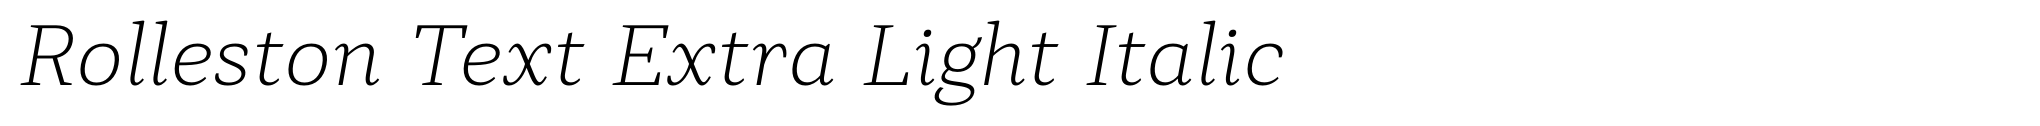 Rolleston Text Extra Light Italic image